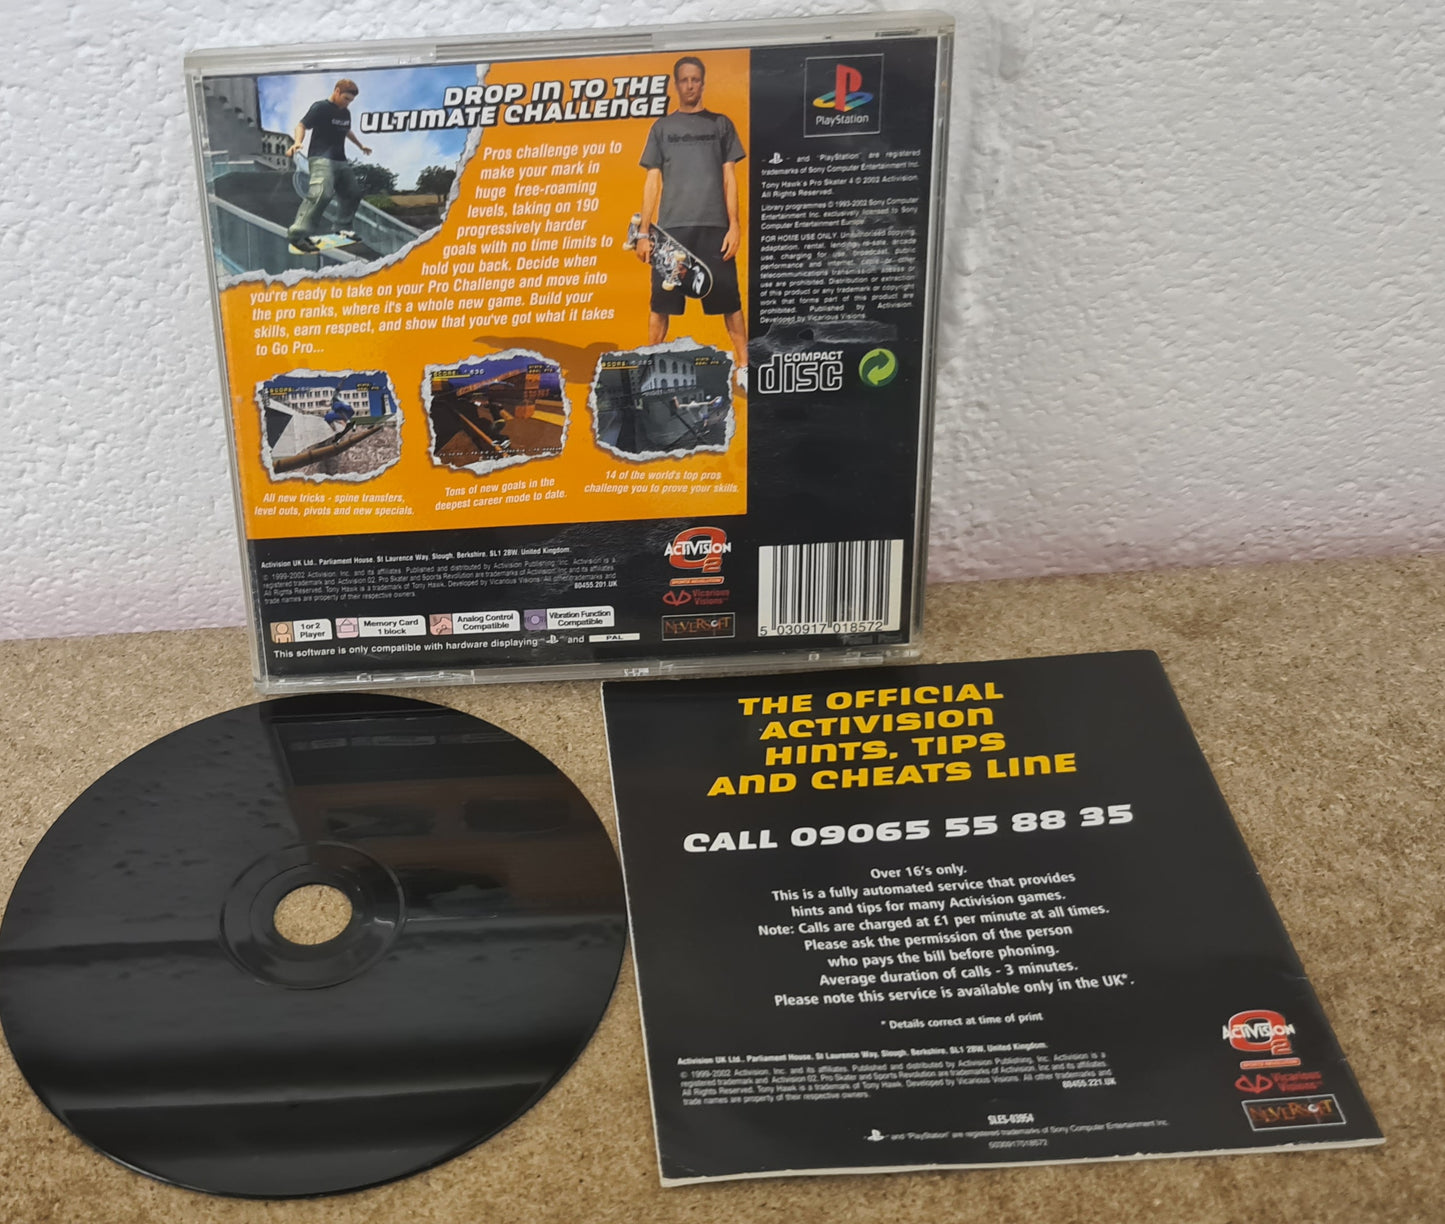 Tony Hawk's Pro Skater 4 Black Label Sony Playstation 1 (PS1) Game